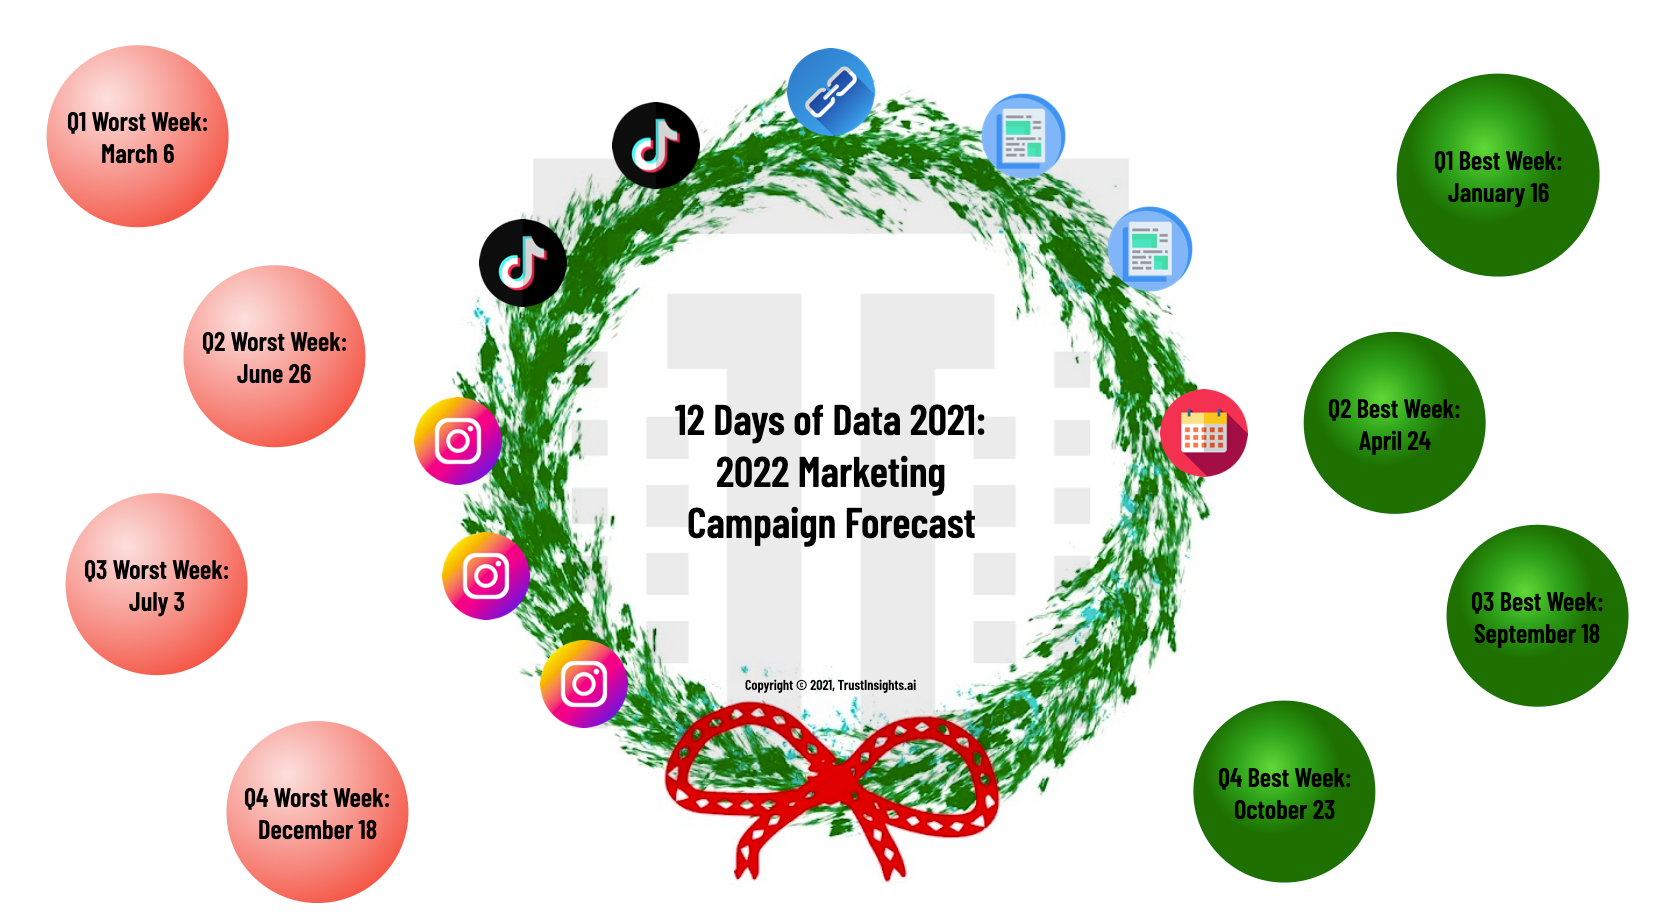 2022 Marketing Campaign Forecast